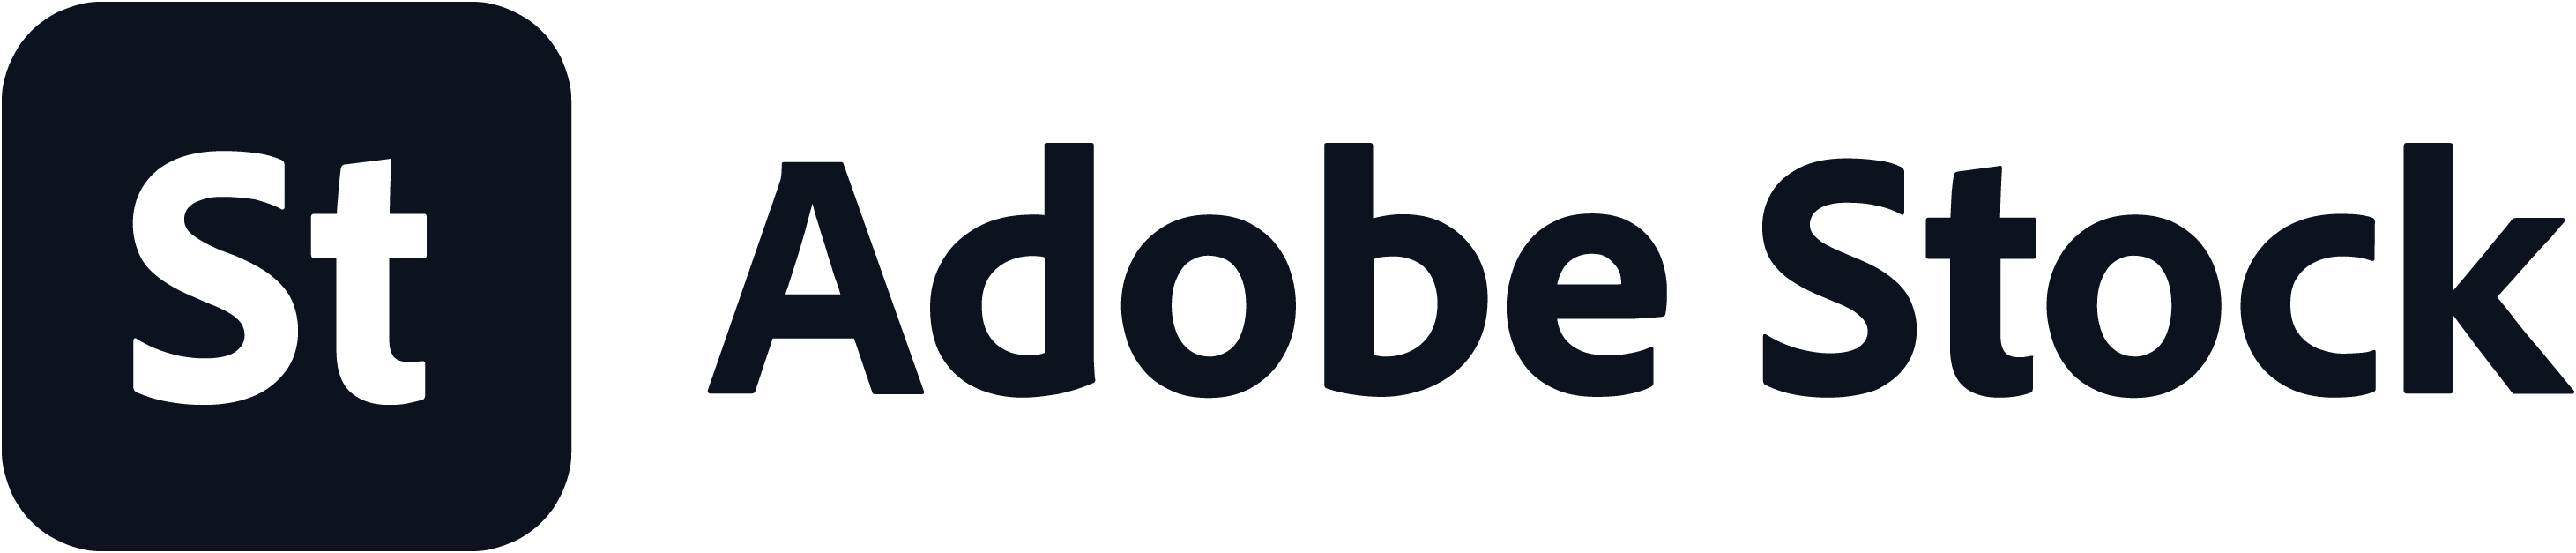 stock logo 2020 dark 1